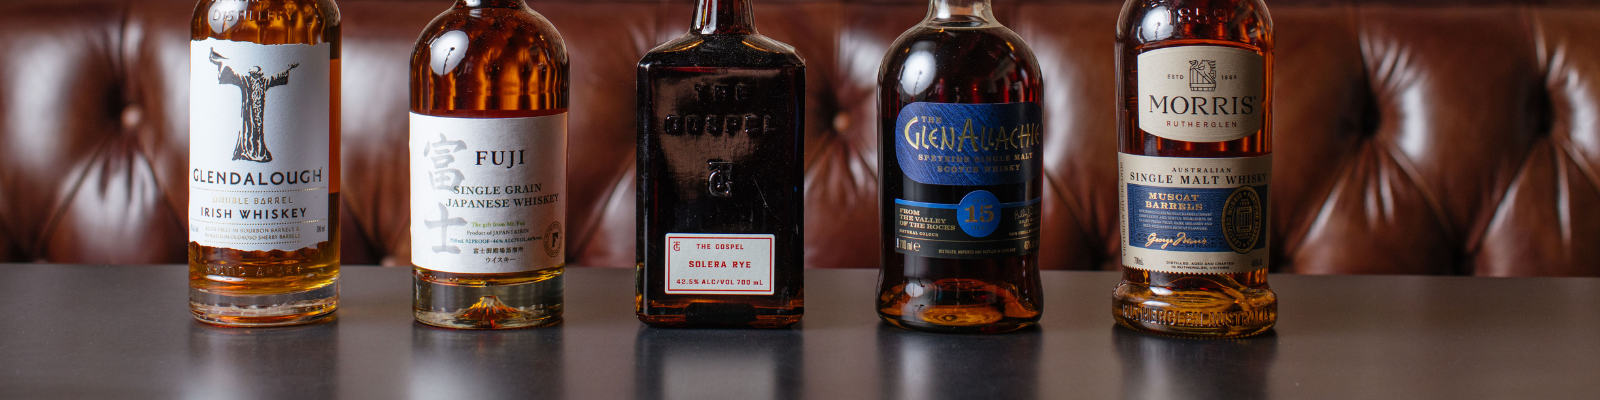 The Wonderful World of Whiskey at L’Chaim